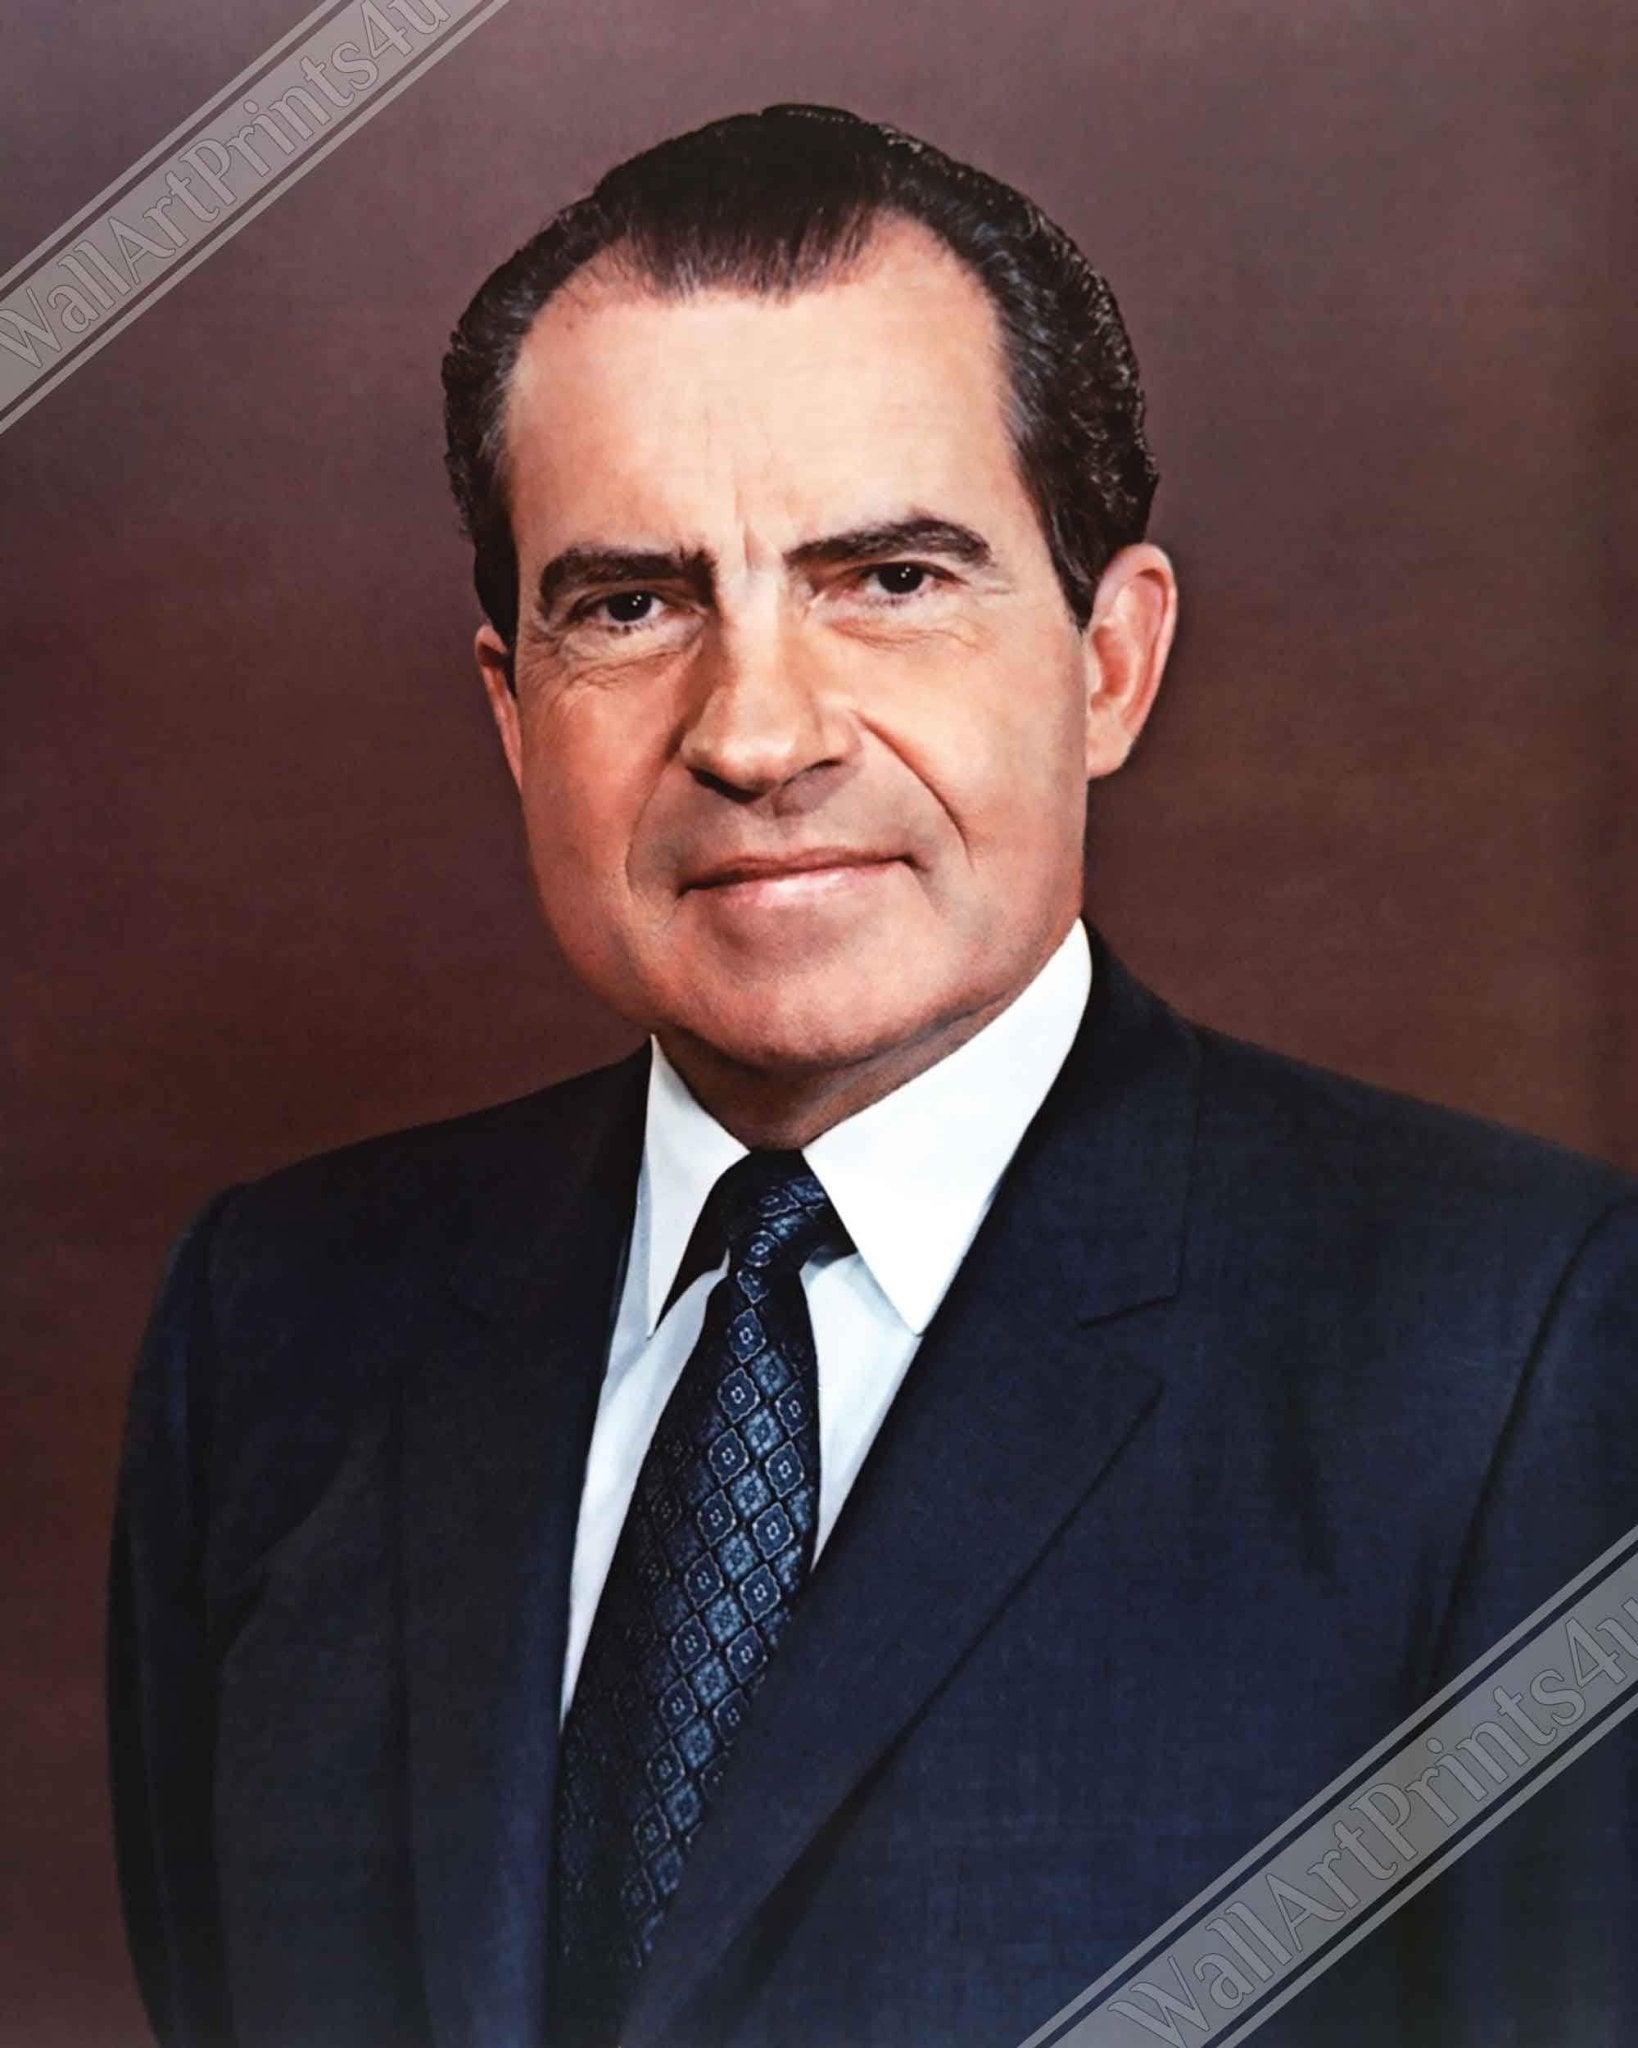 Richard Nixon Framed, 37th President Of These United States, Vintage Photo Portrait - Richard Nixon Framed Print UK, EU USA Domestic Shipping - WallArtPrints4U